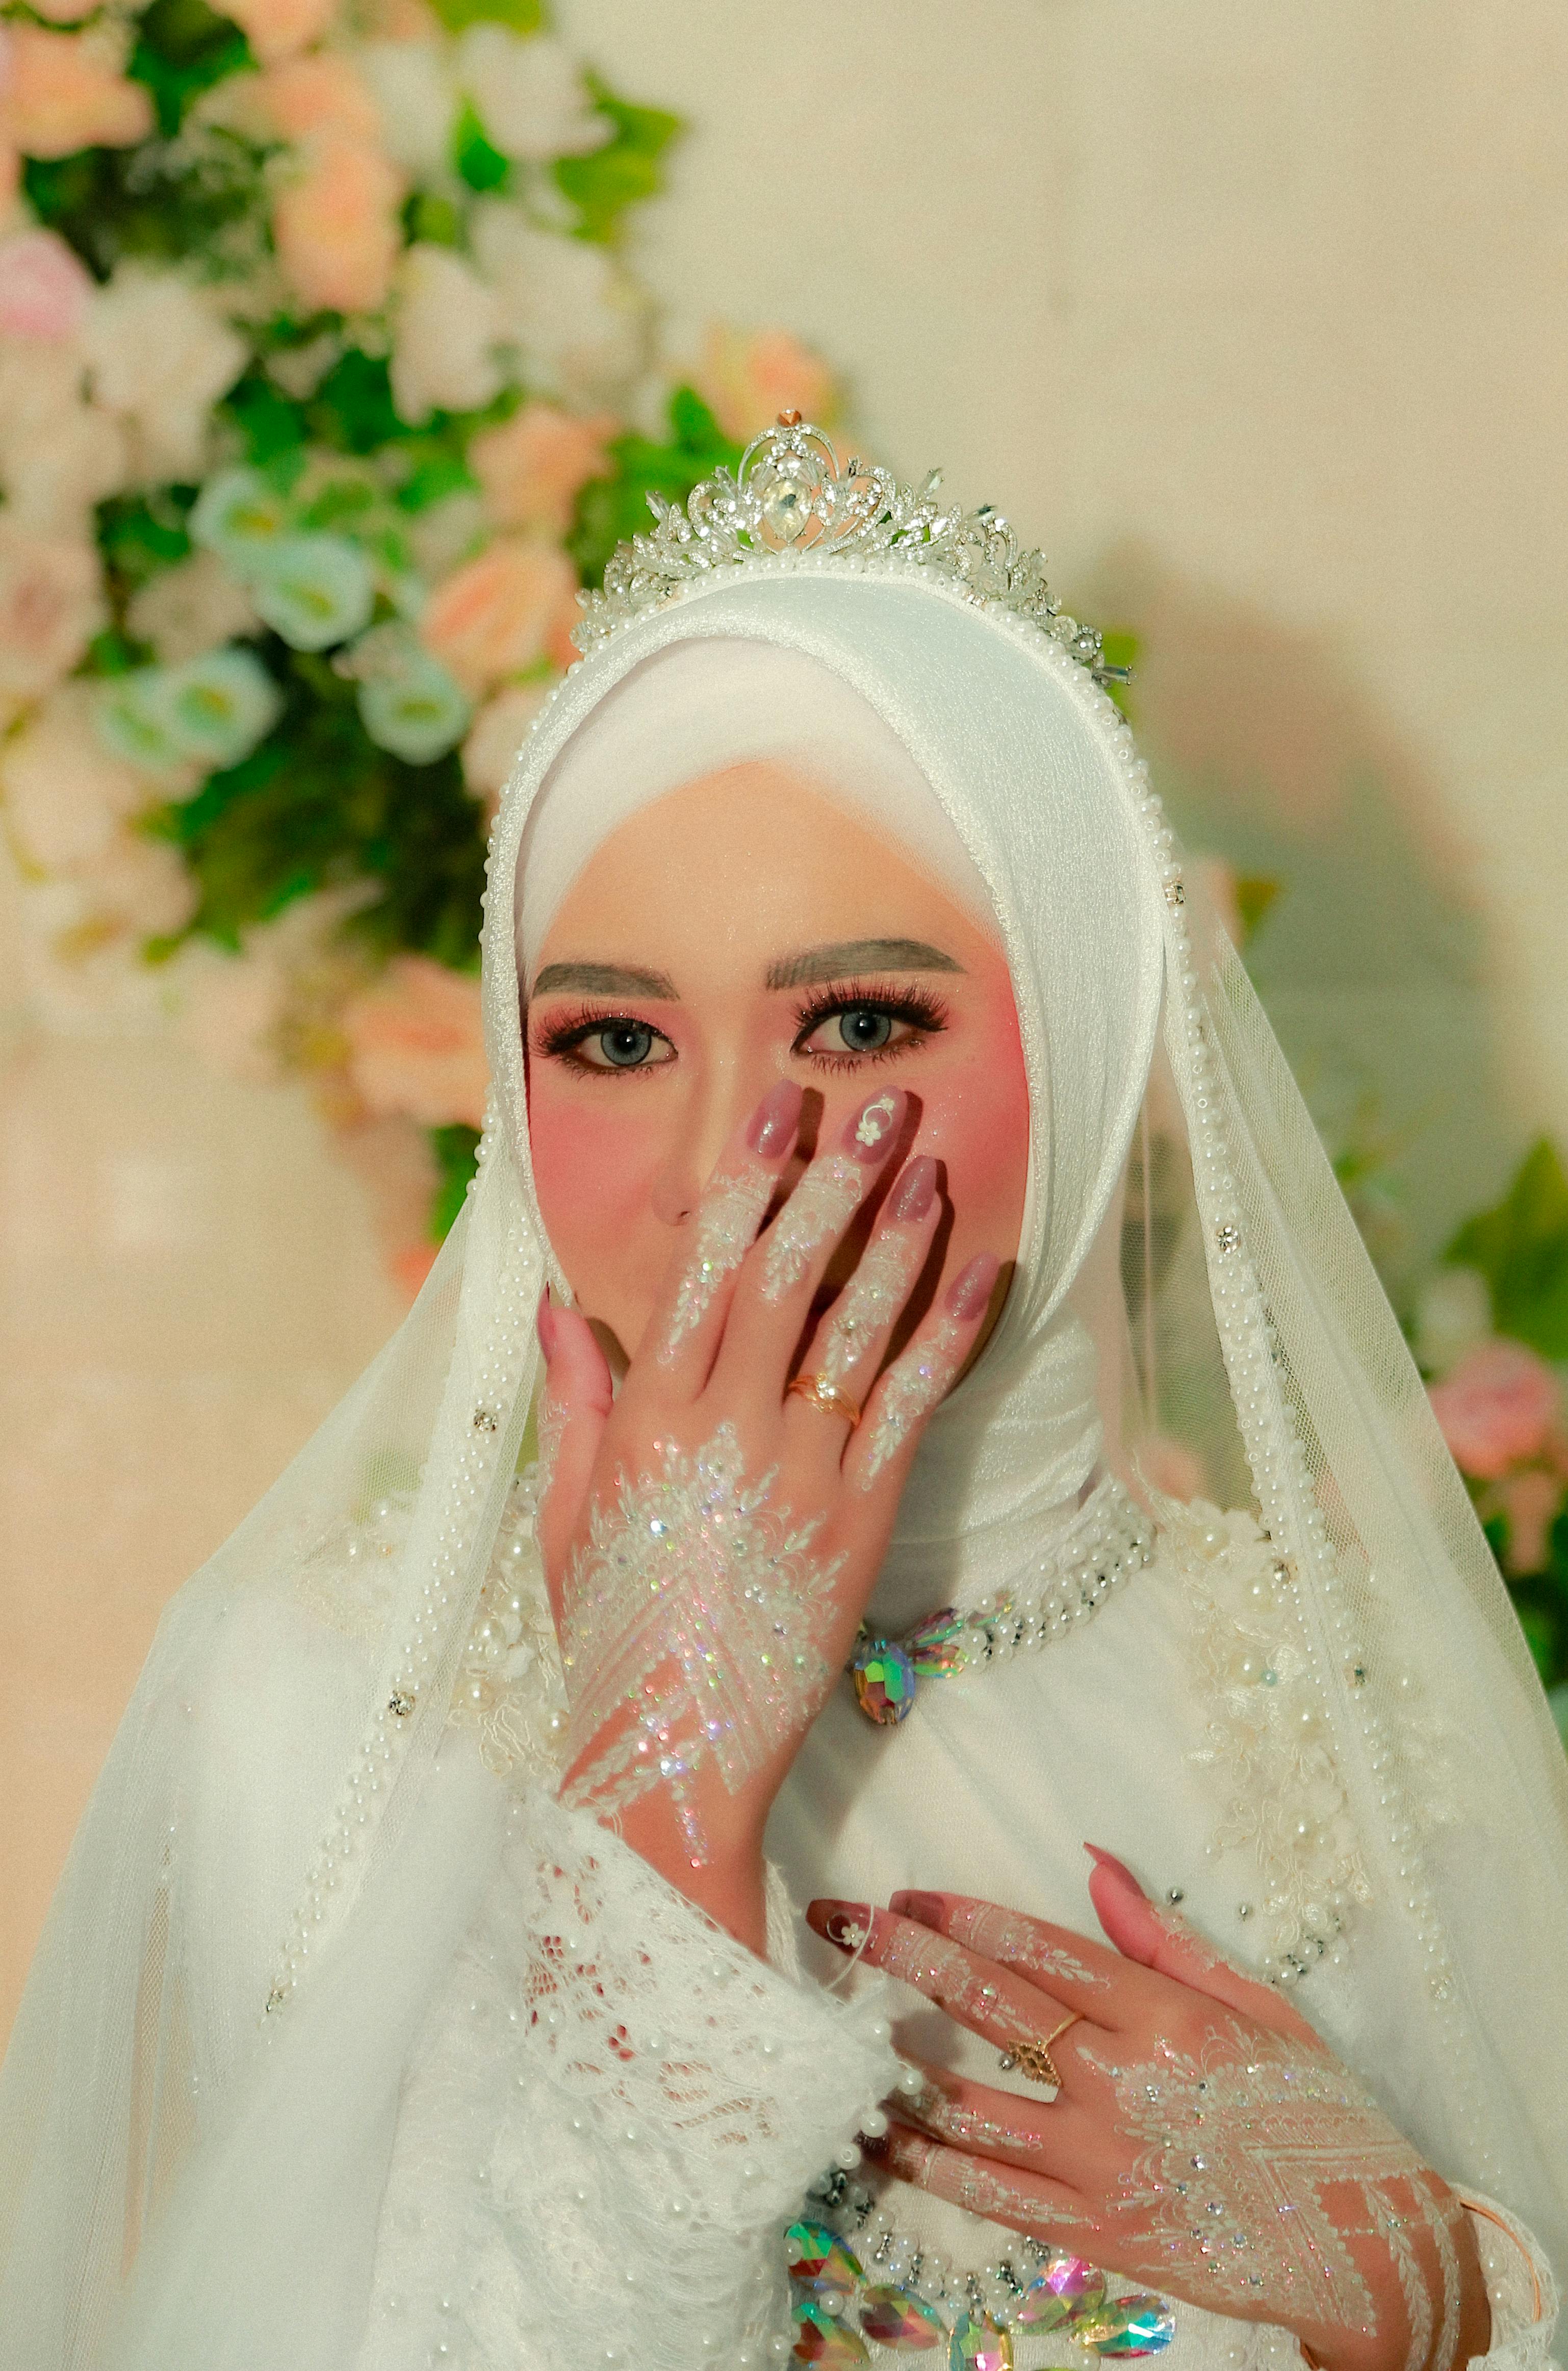 Wedding Muslim Photos, Download The BEST Free Wedding Muslim Stock Photos &  HD Images